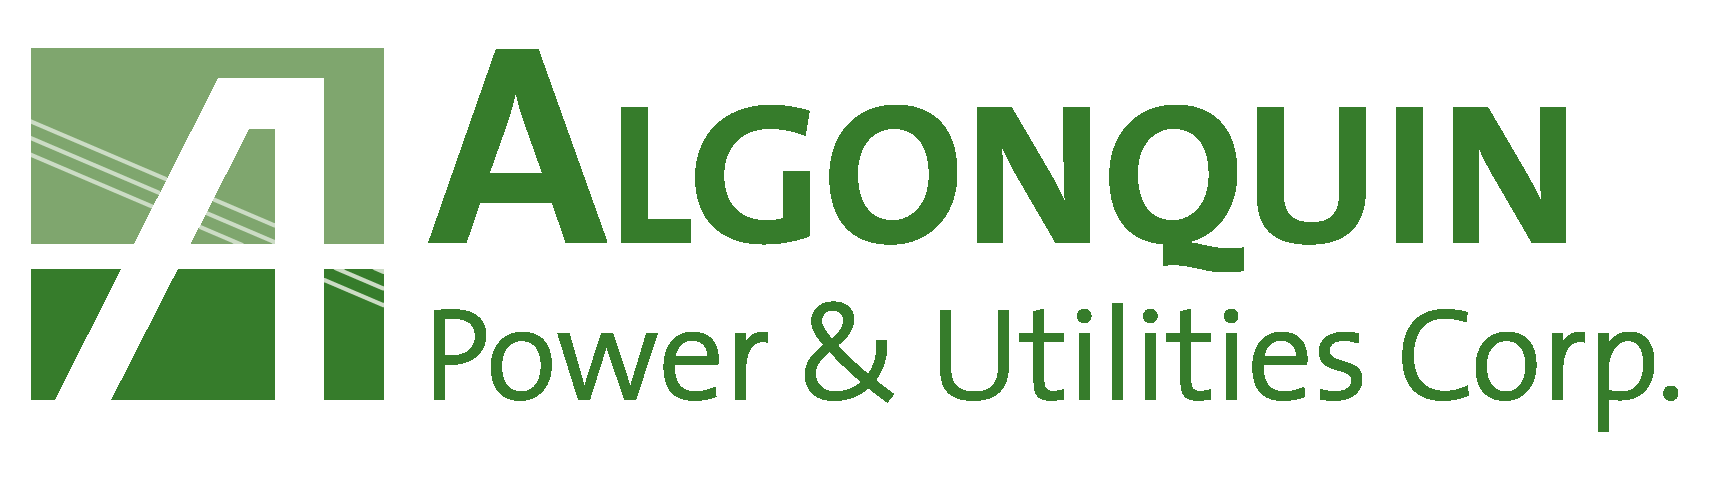 Algonquin Power & Utilities Corp